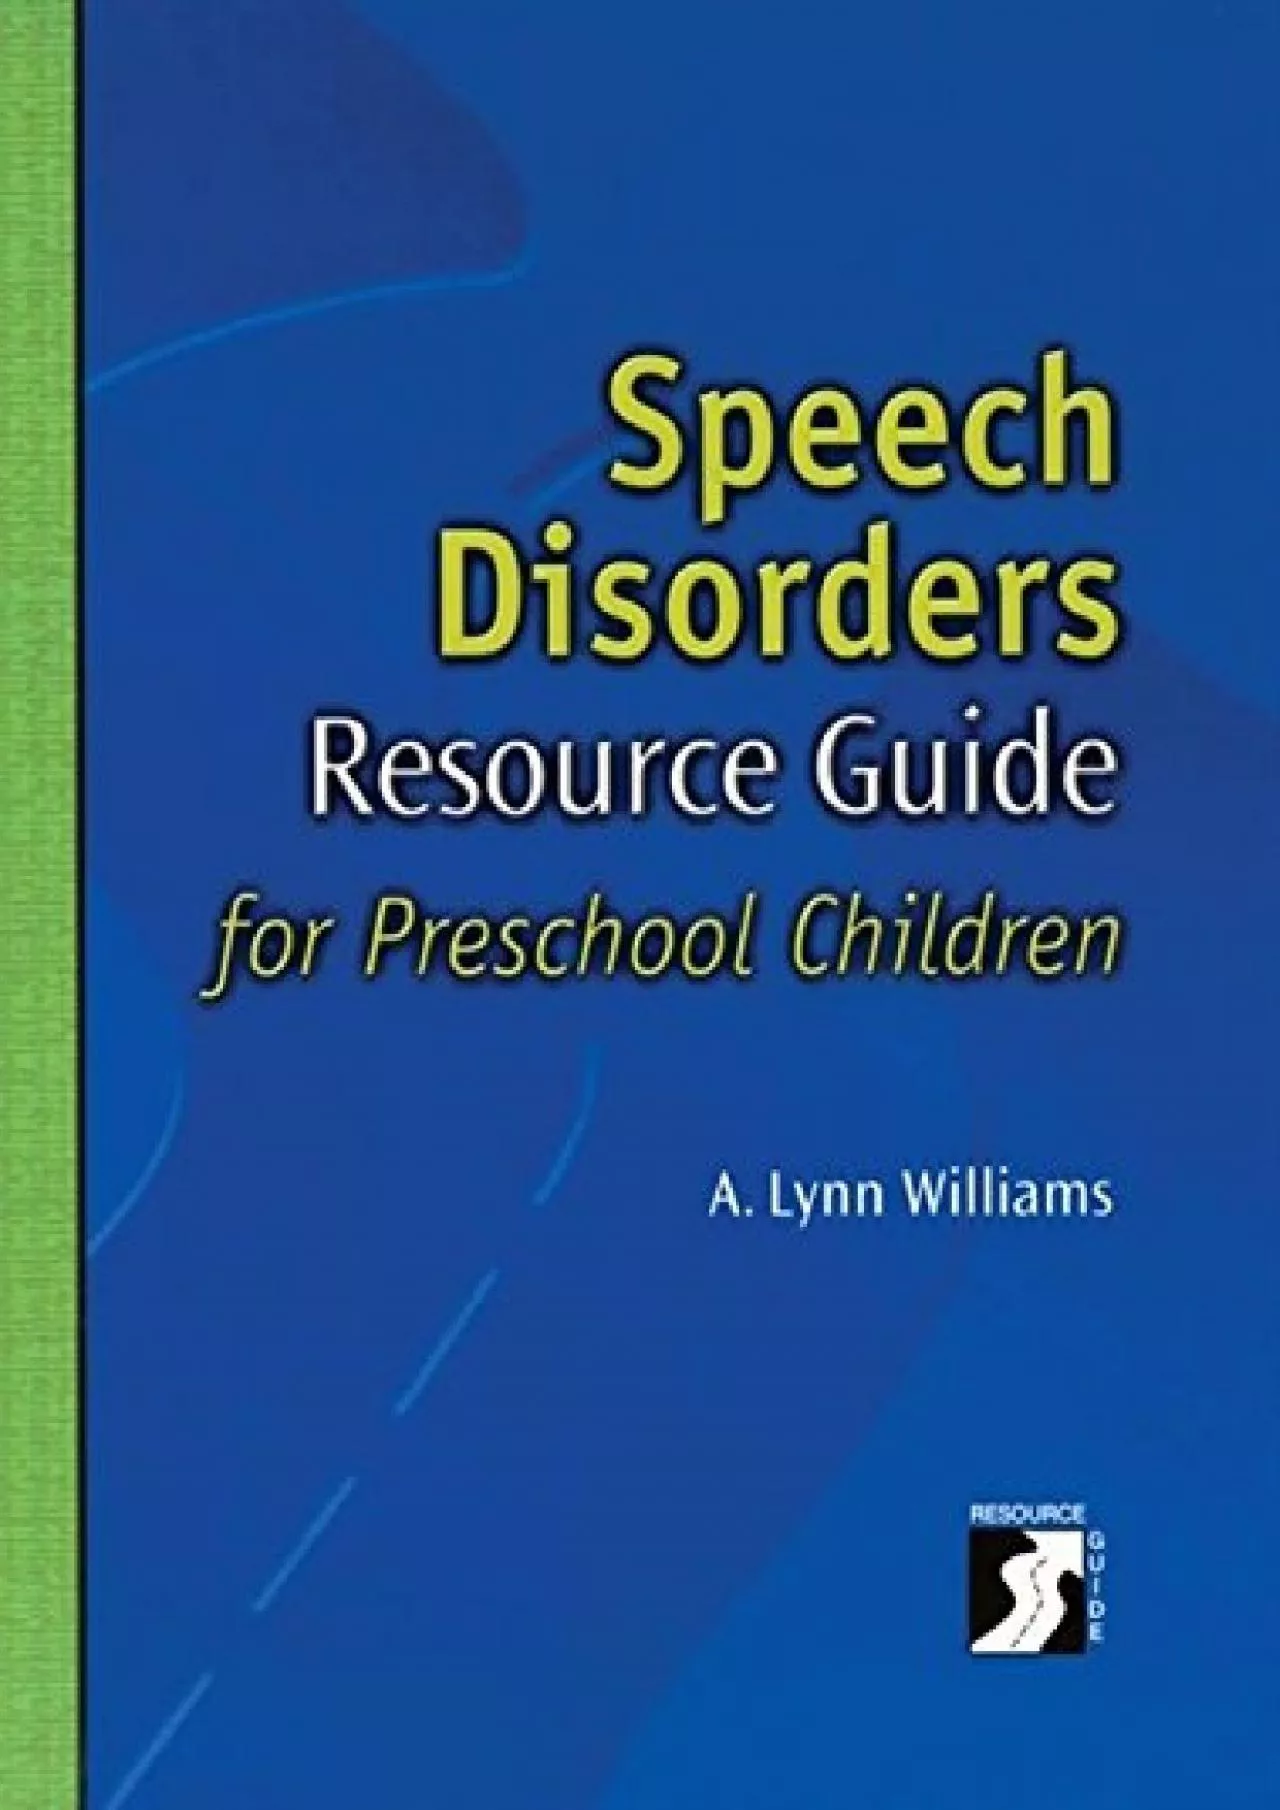 (BOOK)-Speech Disorders Resource Guide for Preschool Children (Singular Resource Guide